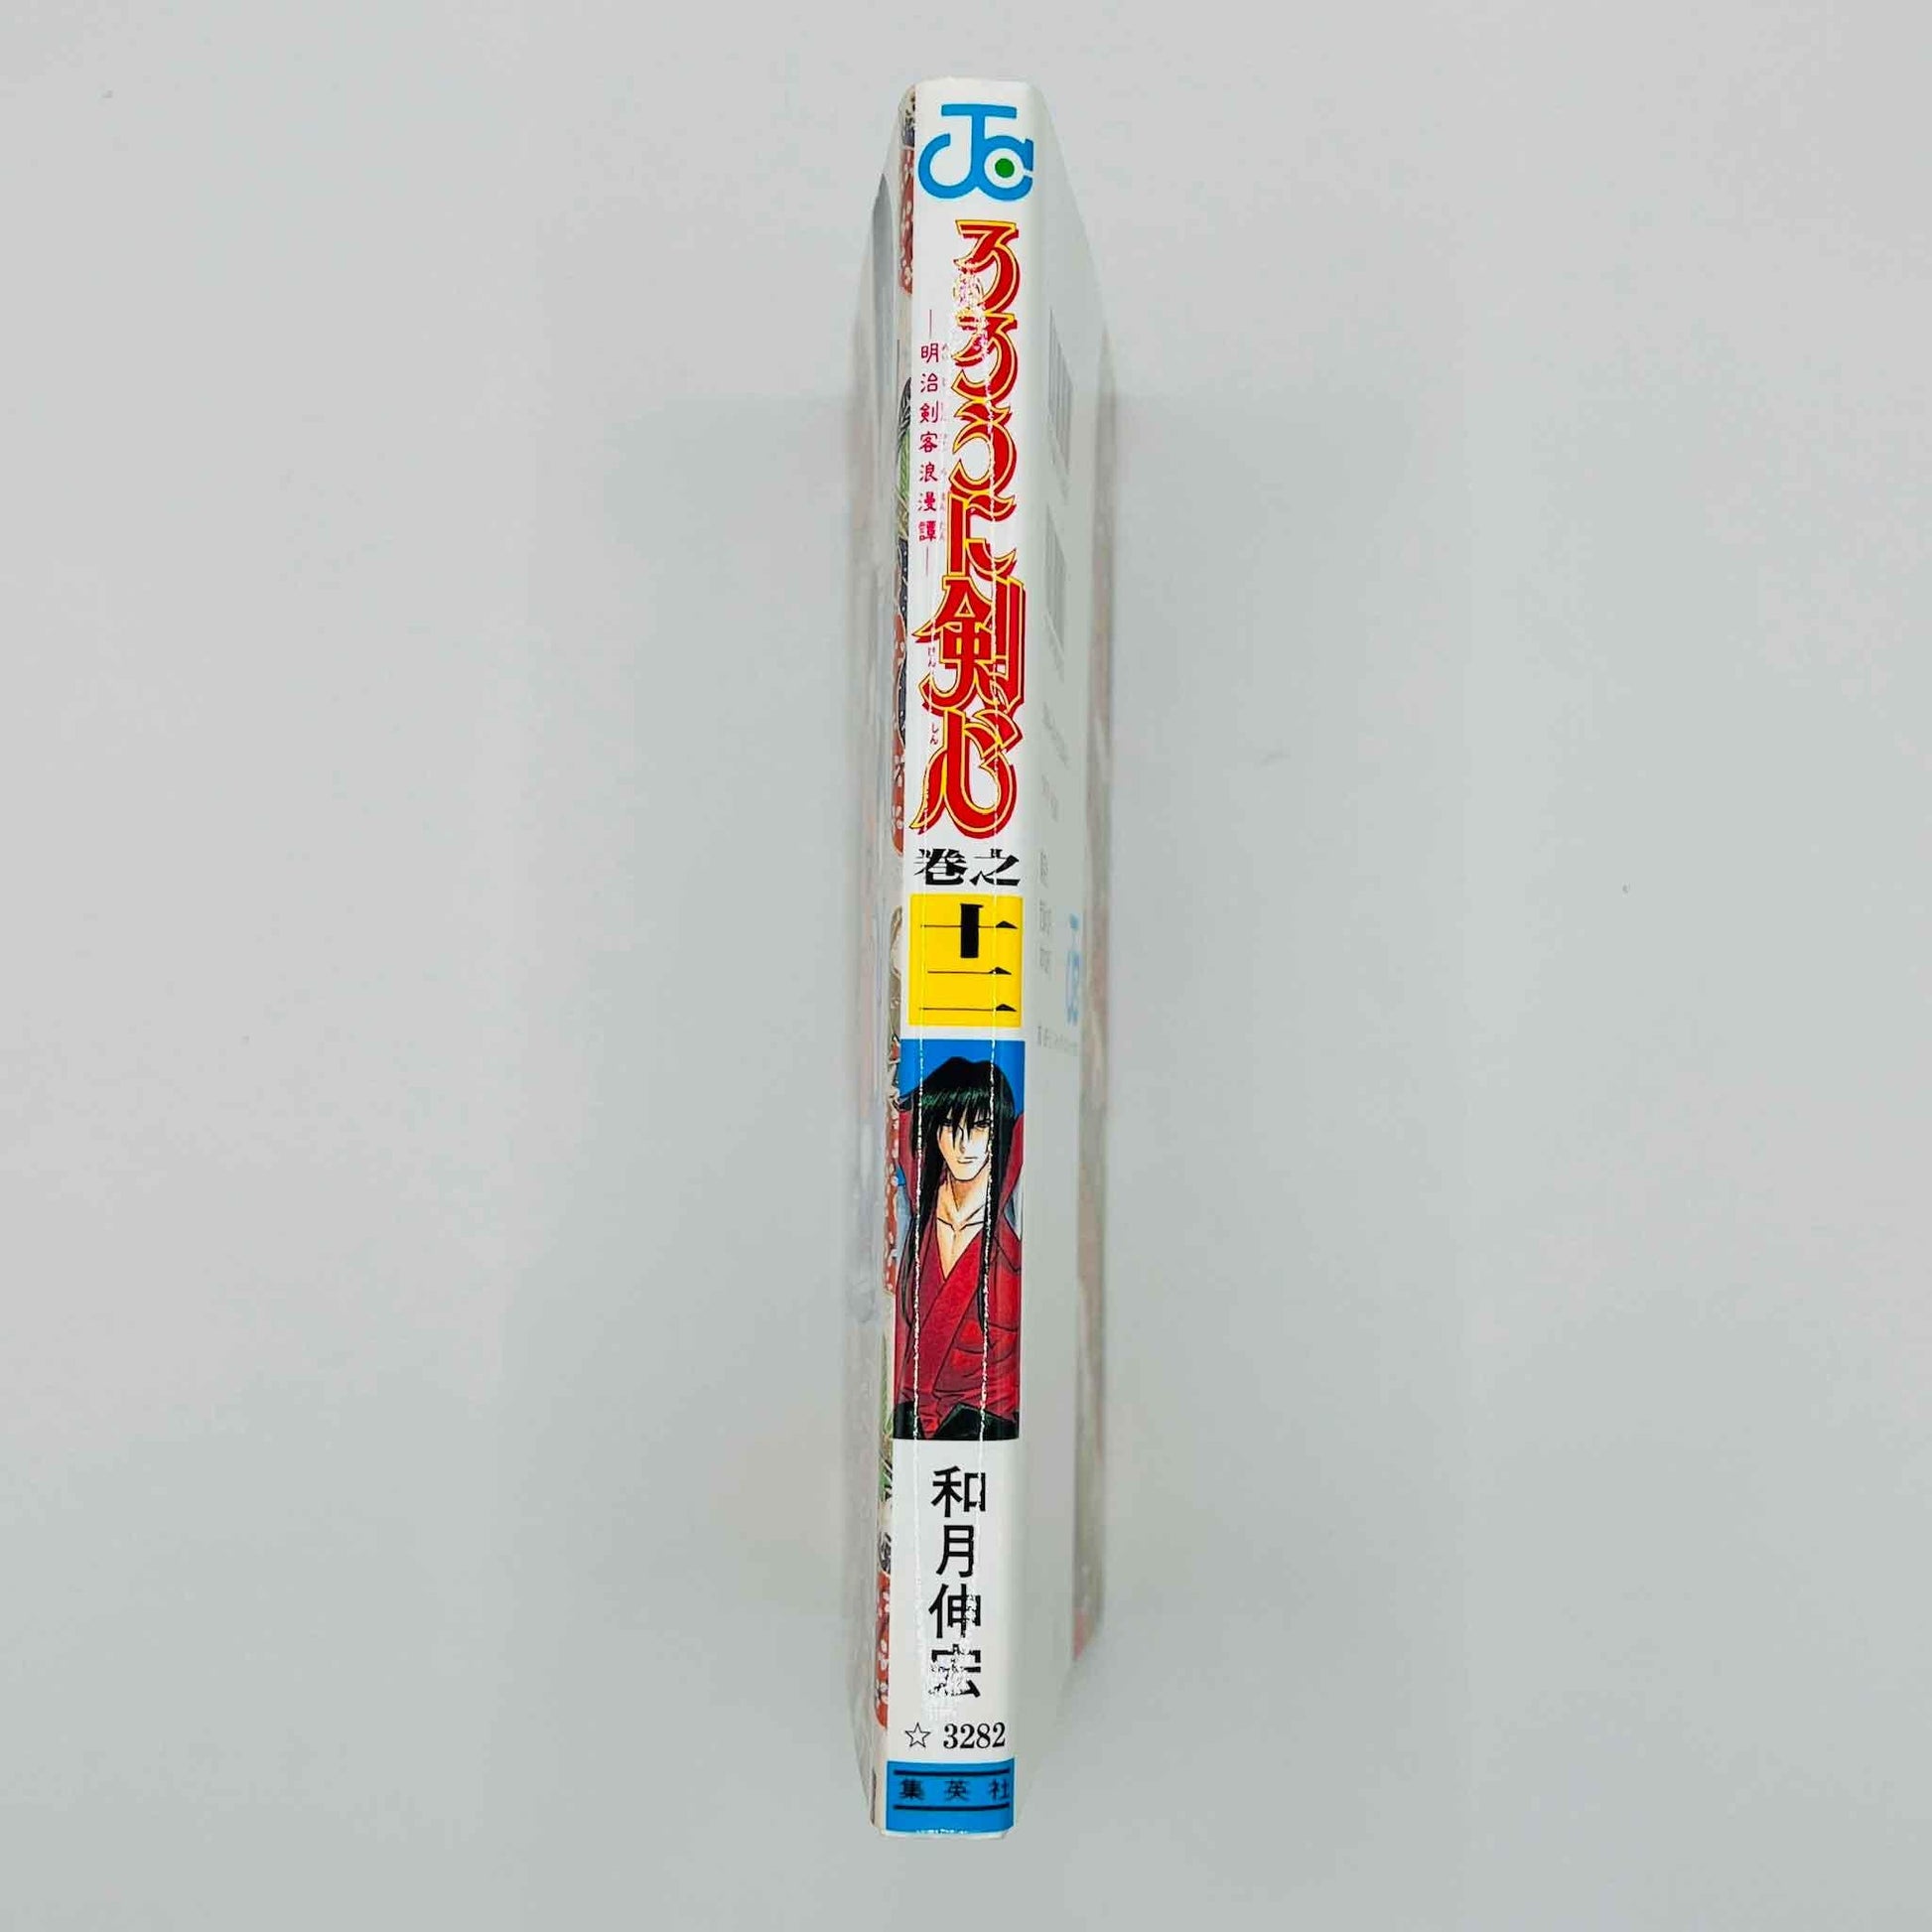 Rurouni Kenshin - Volume 12 - 1stPrint.net - 1st First Print Edition Manga Store - M-KENSH-12-001